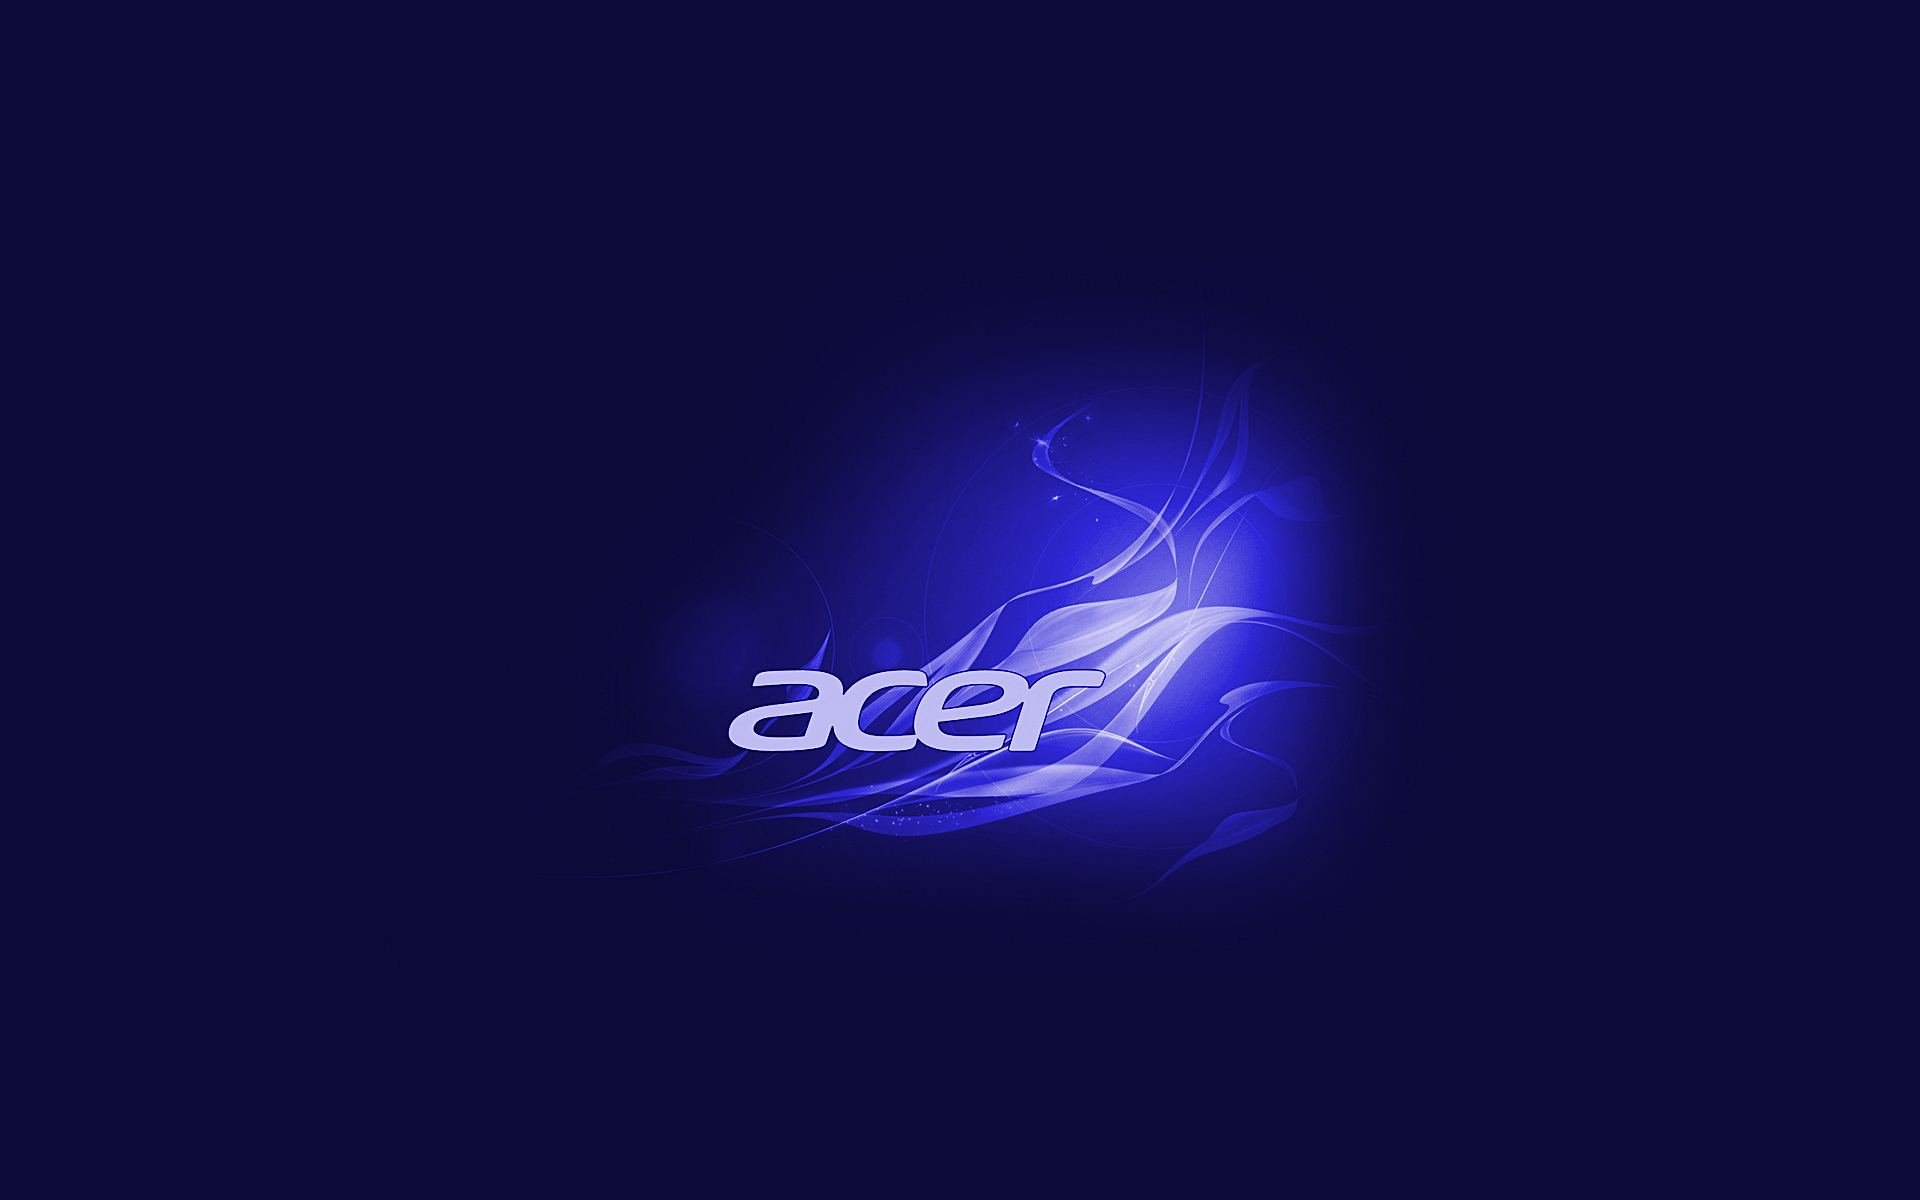 Acer Puter Wallpaper Background